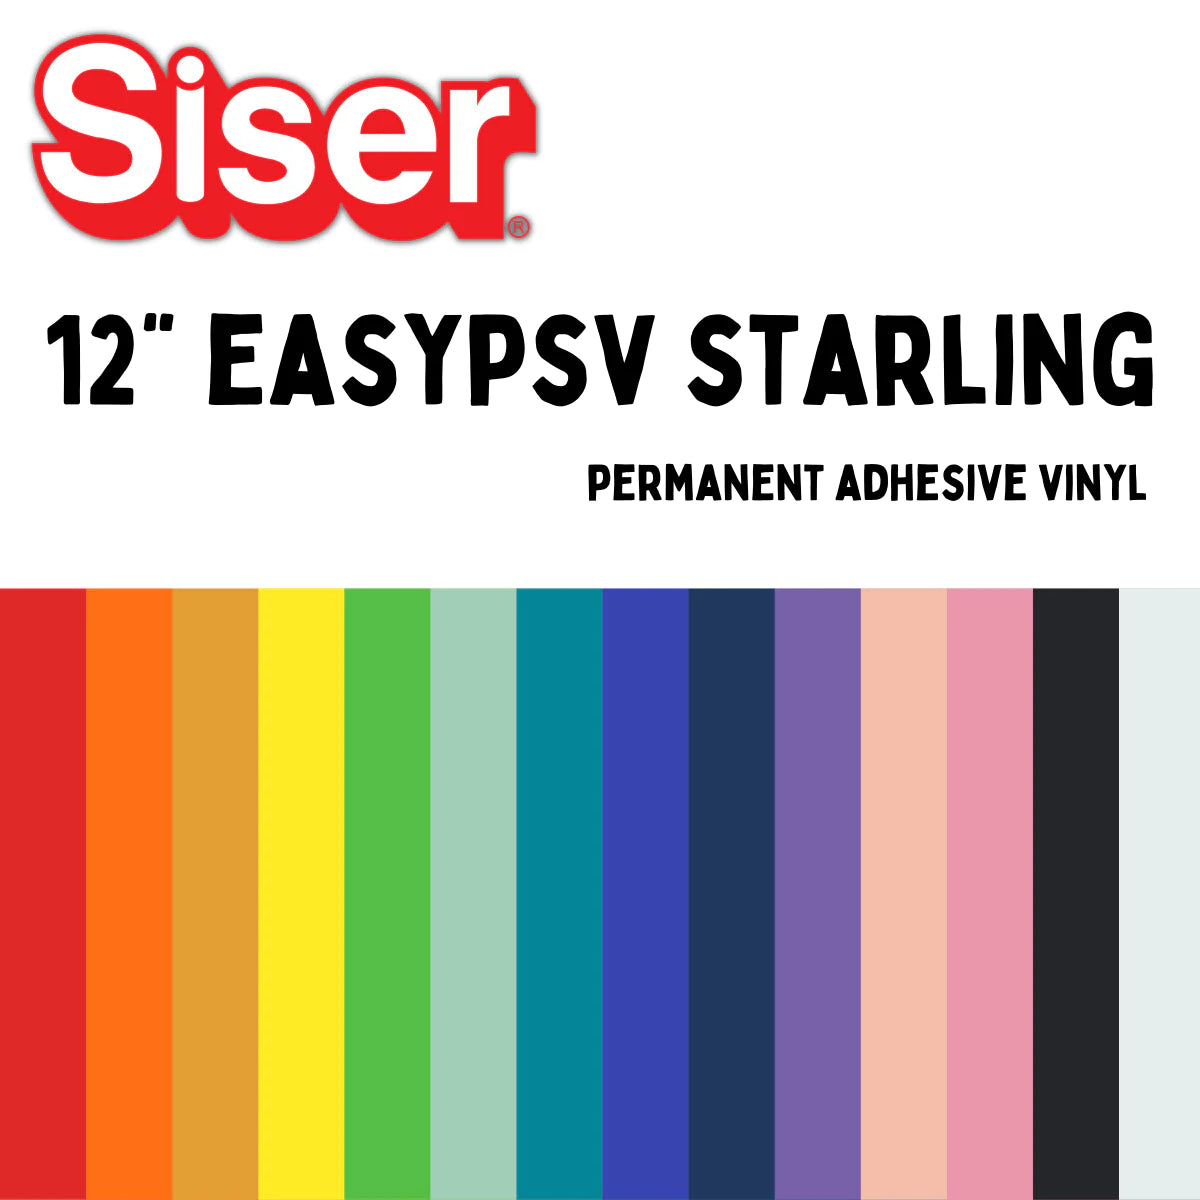 Siser EasyPSV Starling Permanent Pressure Sensitive Adhesive Vinyl 12" Rolls for Sale at World Weidner